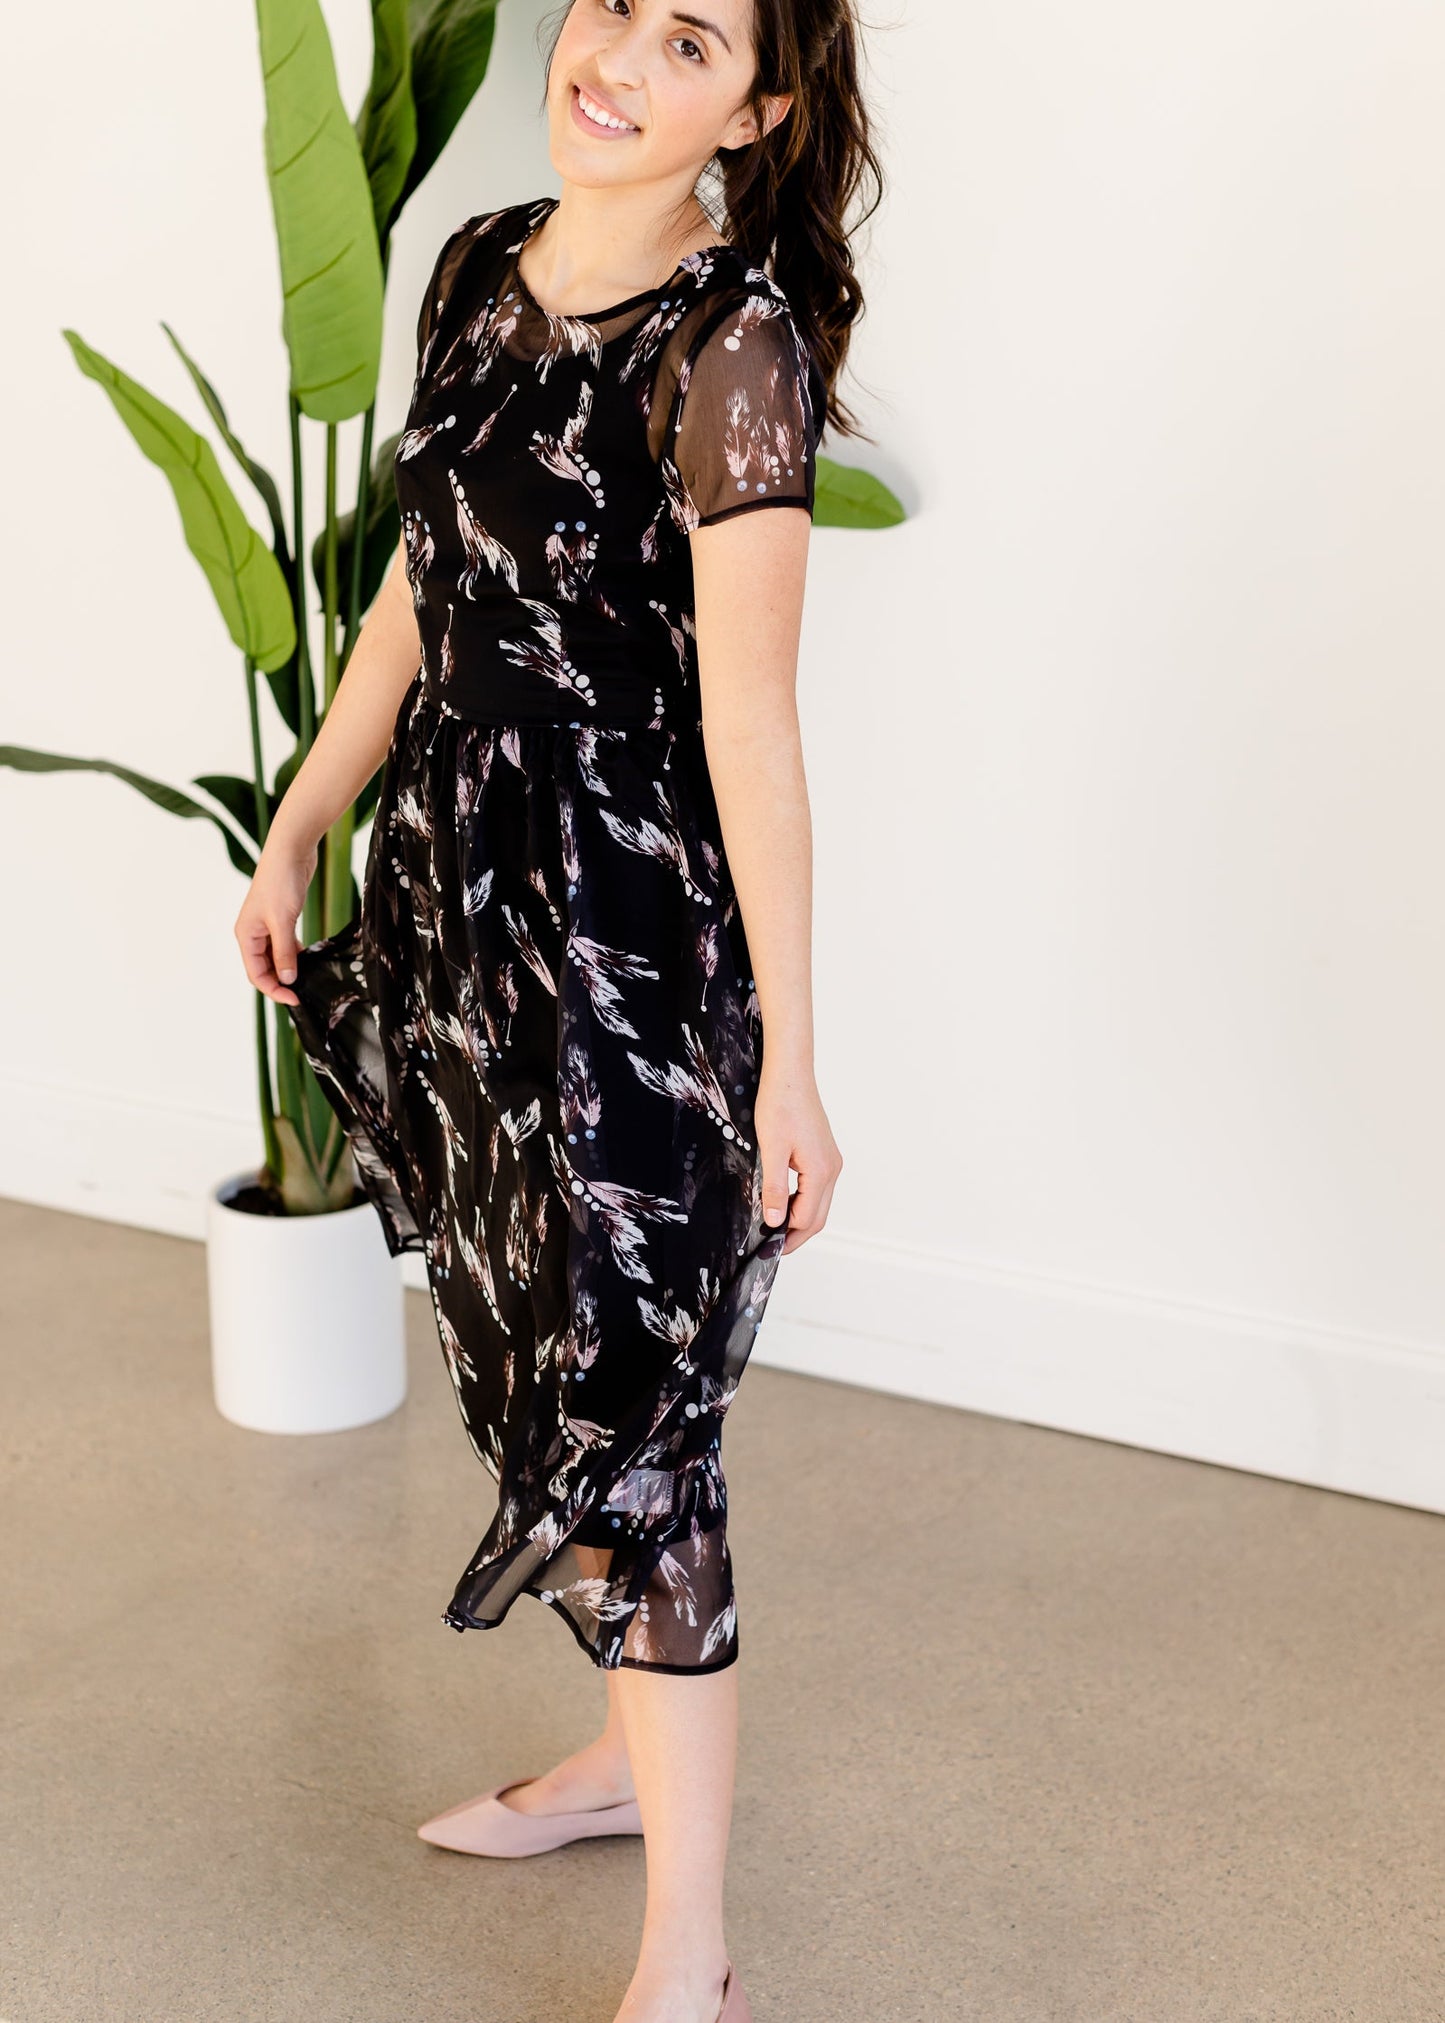 Besy Feather Print Overlay Midi Dress - FINAL SALE Dresses